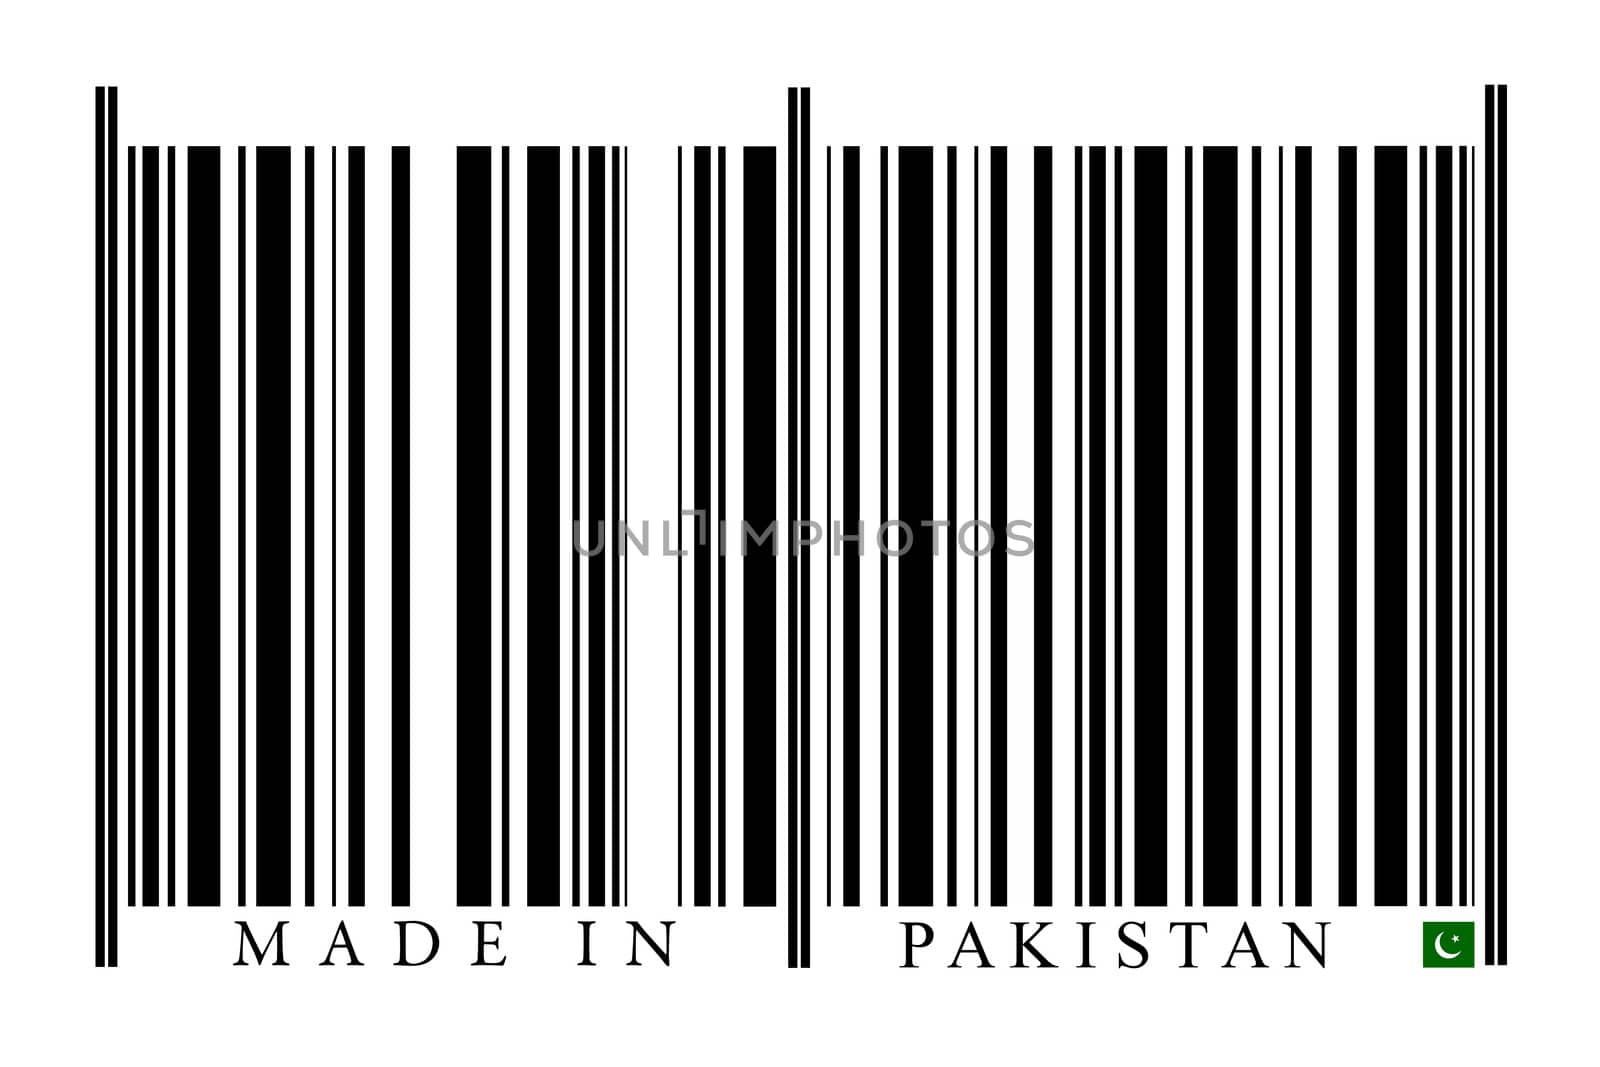 Pakistan Barcode by gemenacom